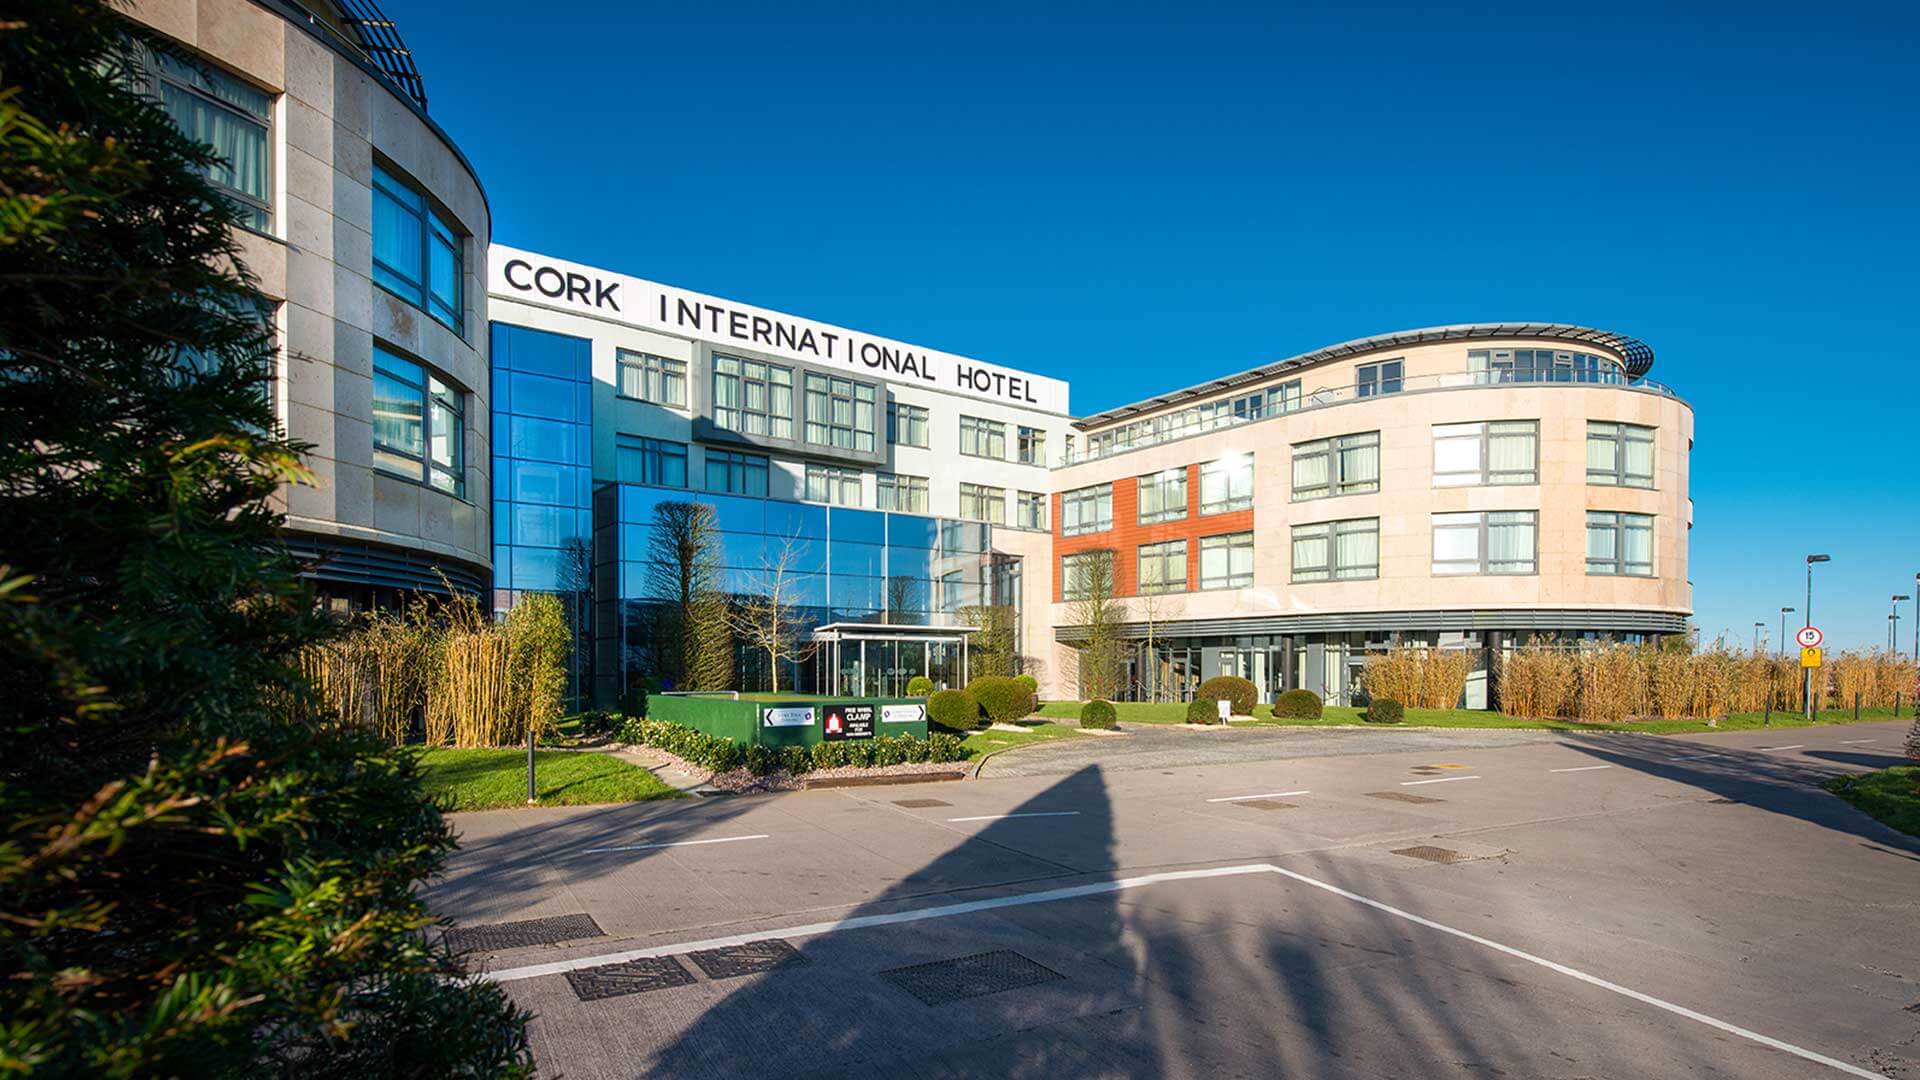 Cork international airport hotel jobs